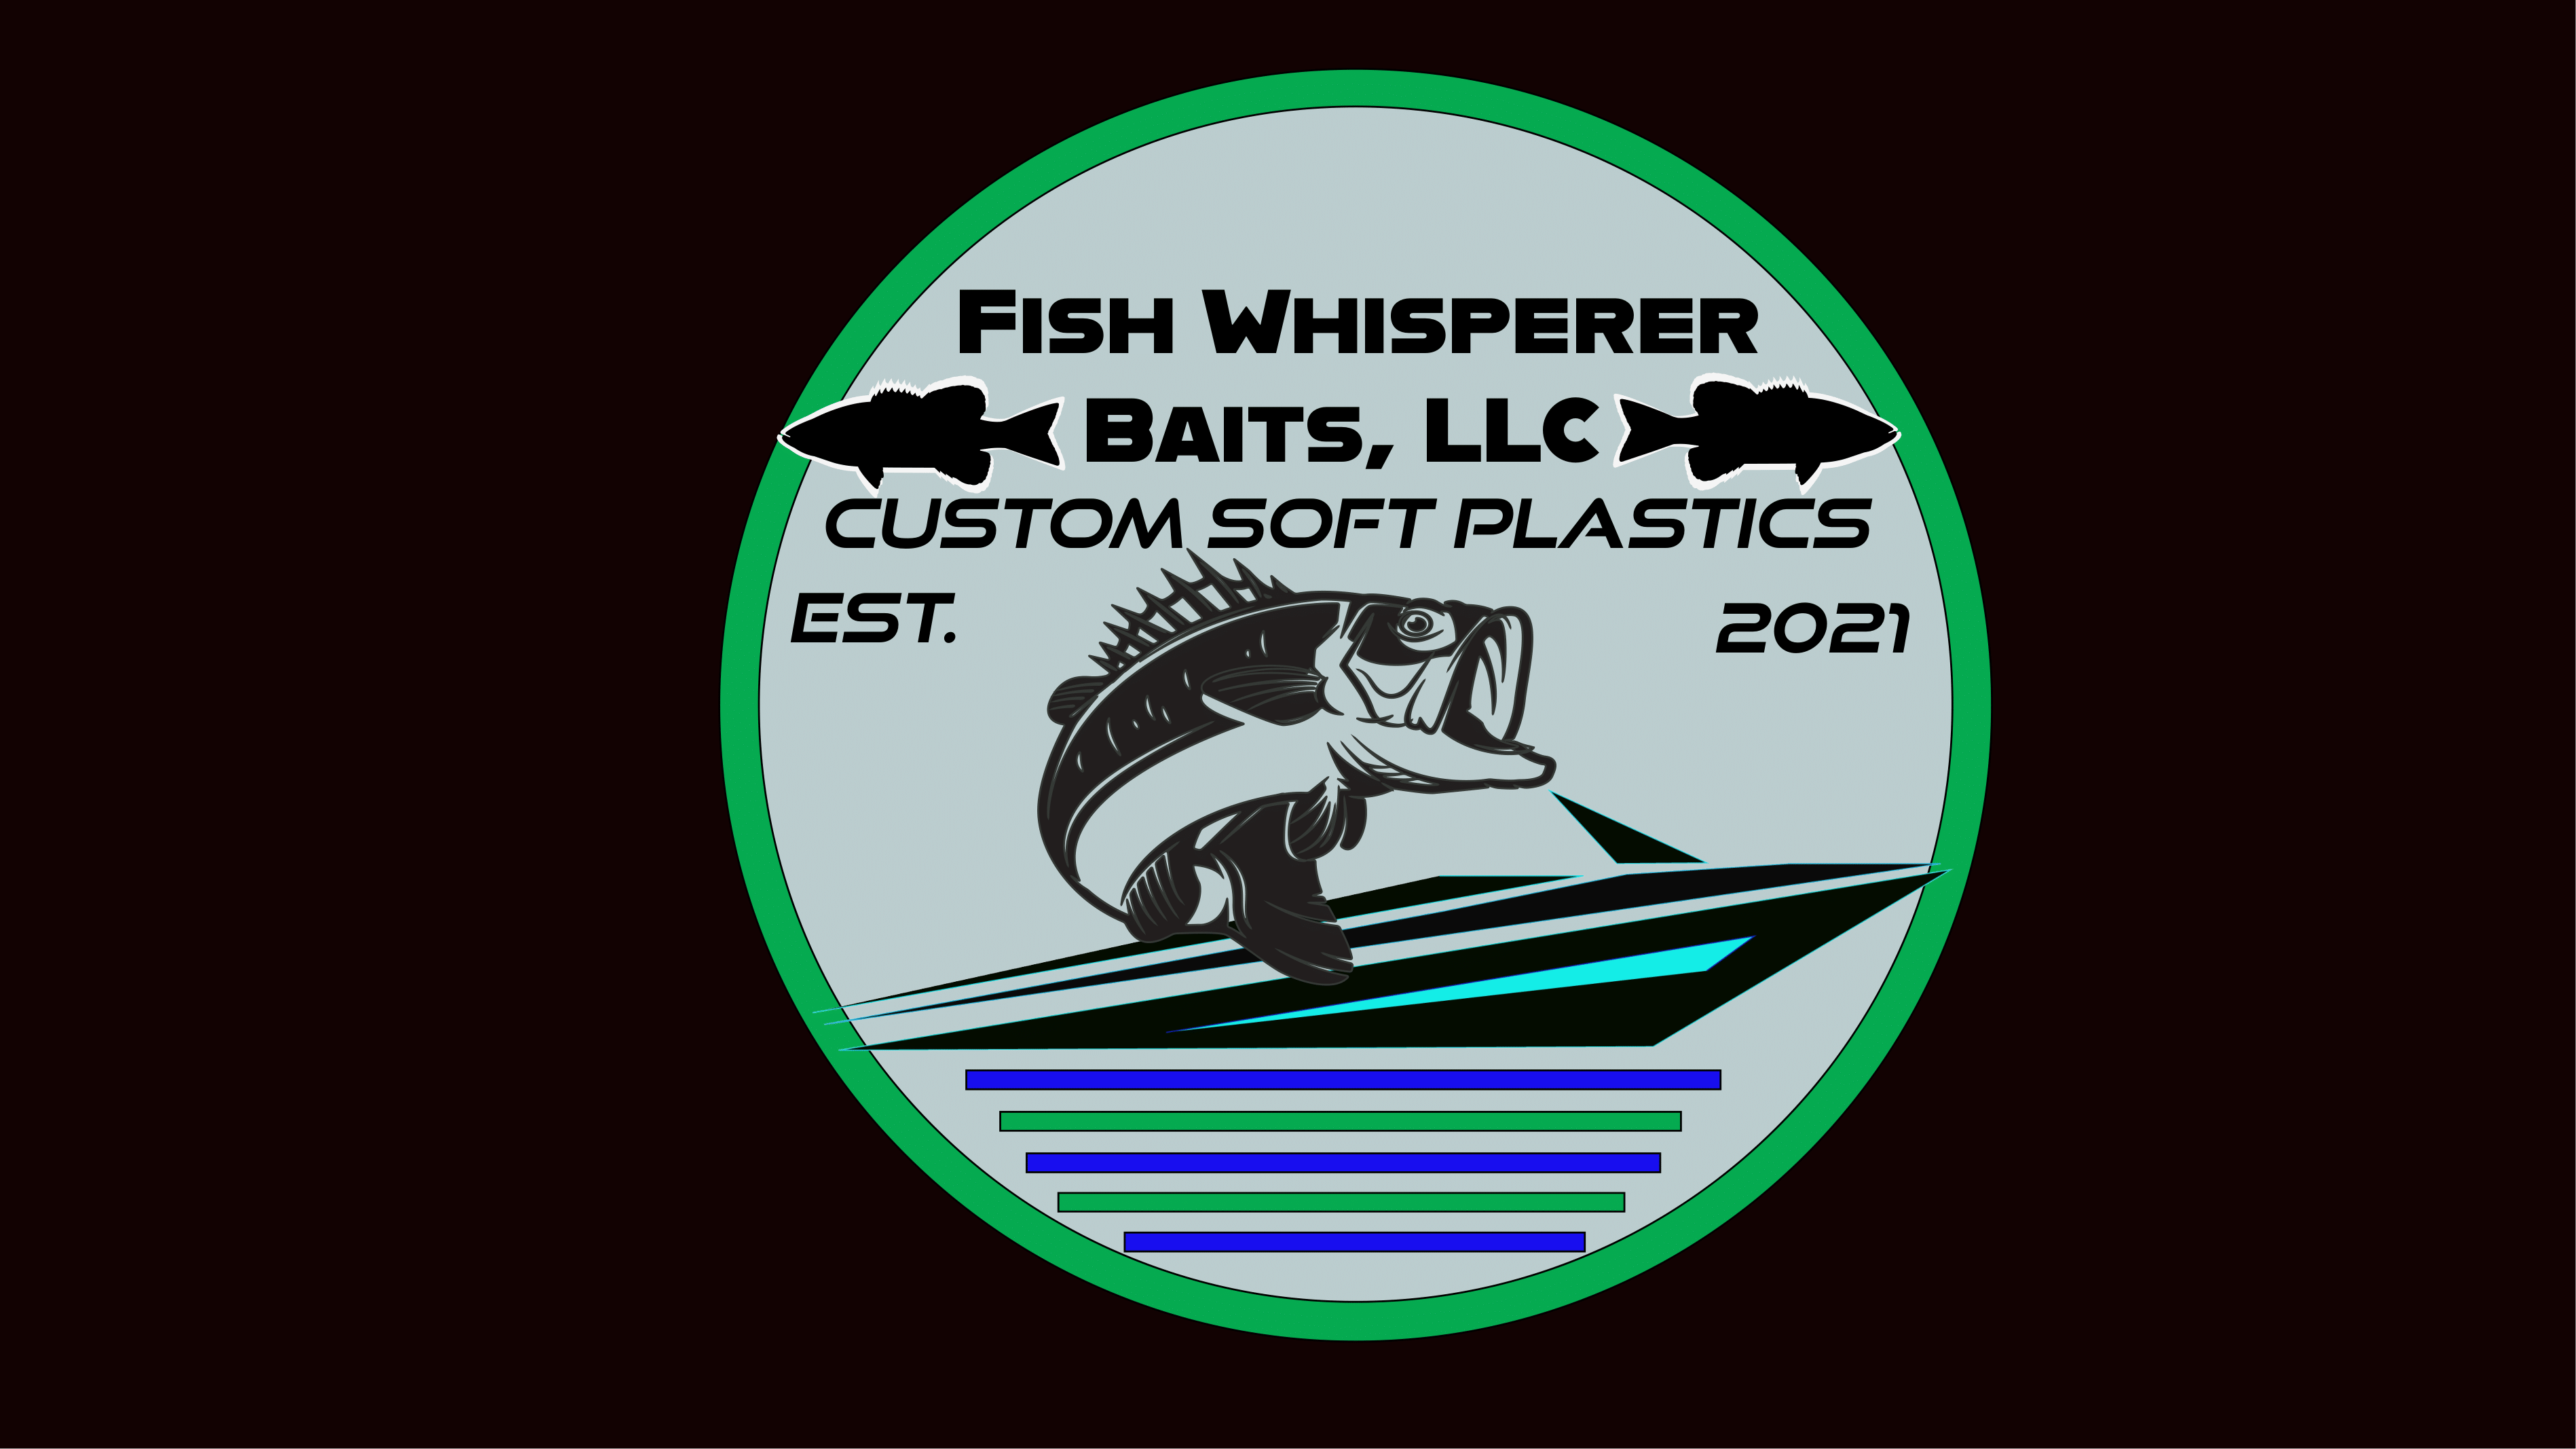 Fish Whisperer Baits, LLC (custom soft plastic fishing lures)